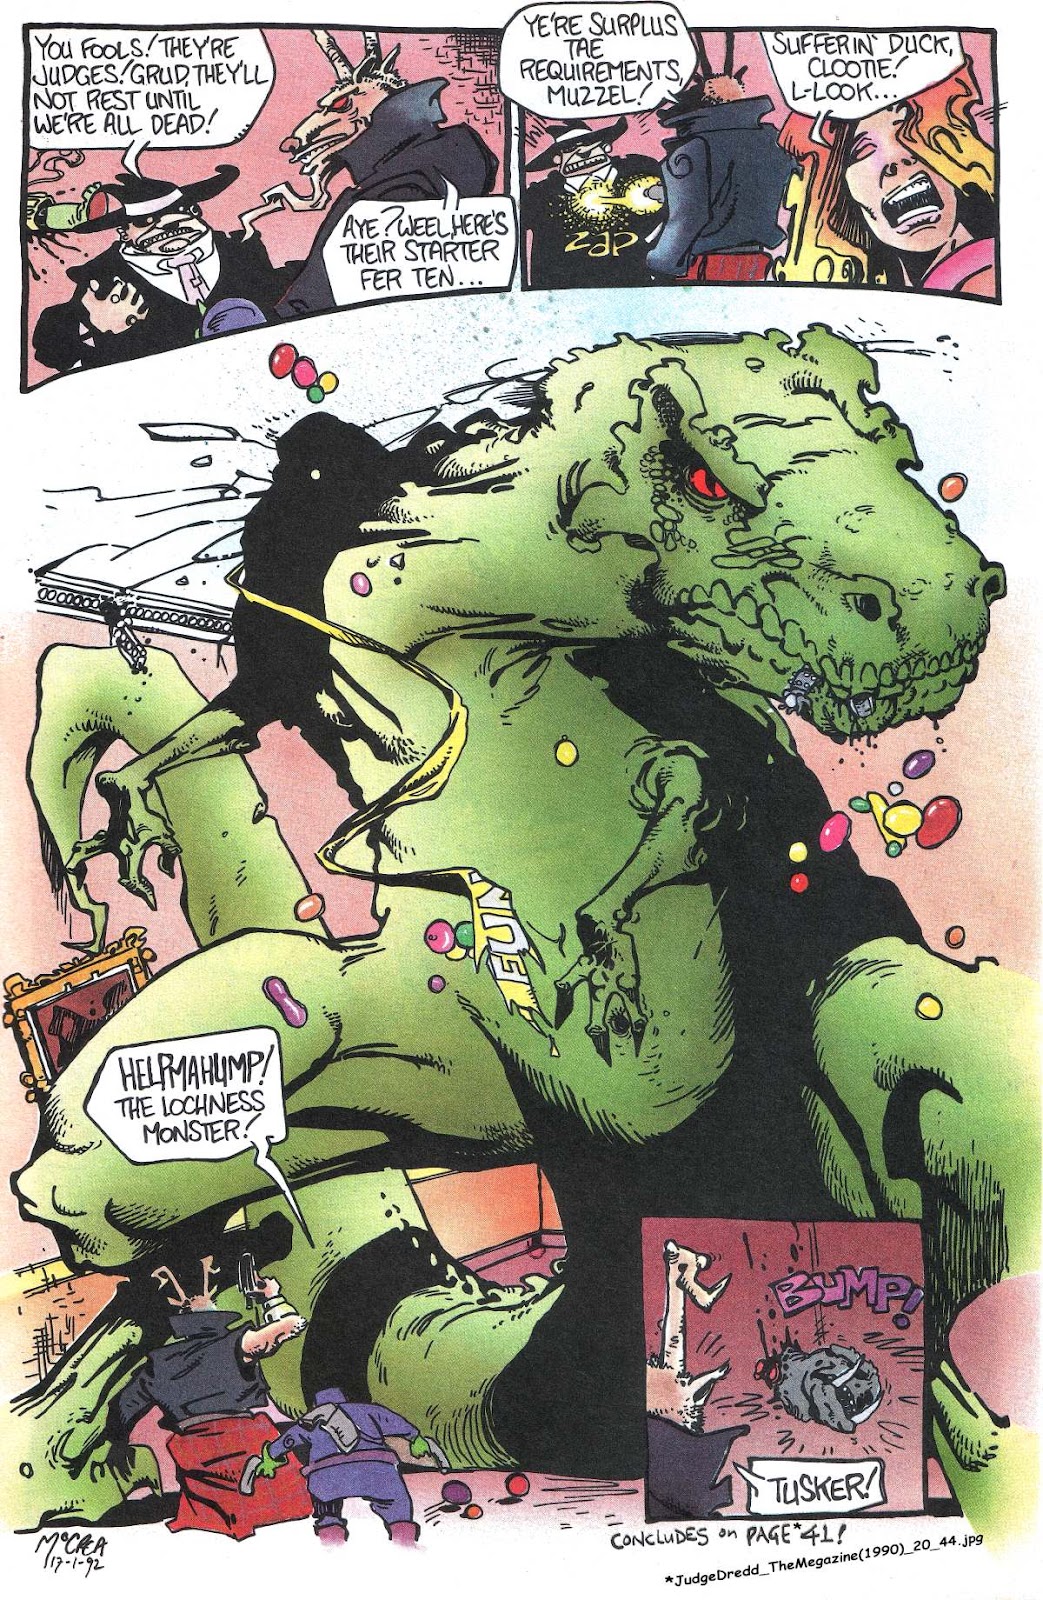 Judge Dredd: The Megazine issue 20 - Page 22